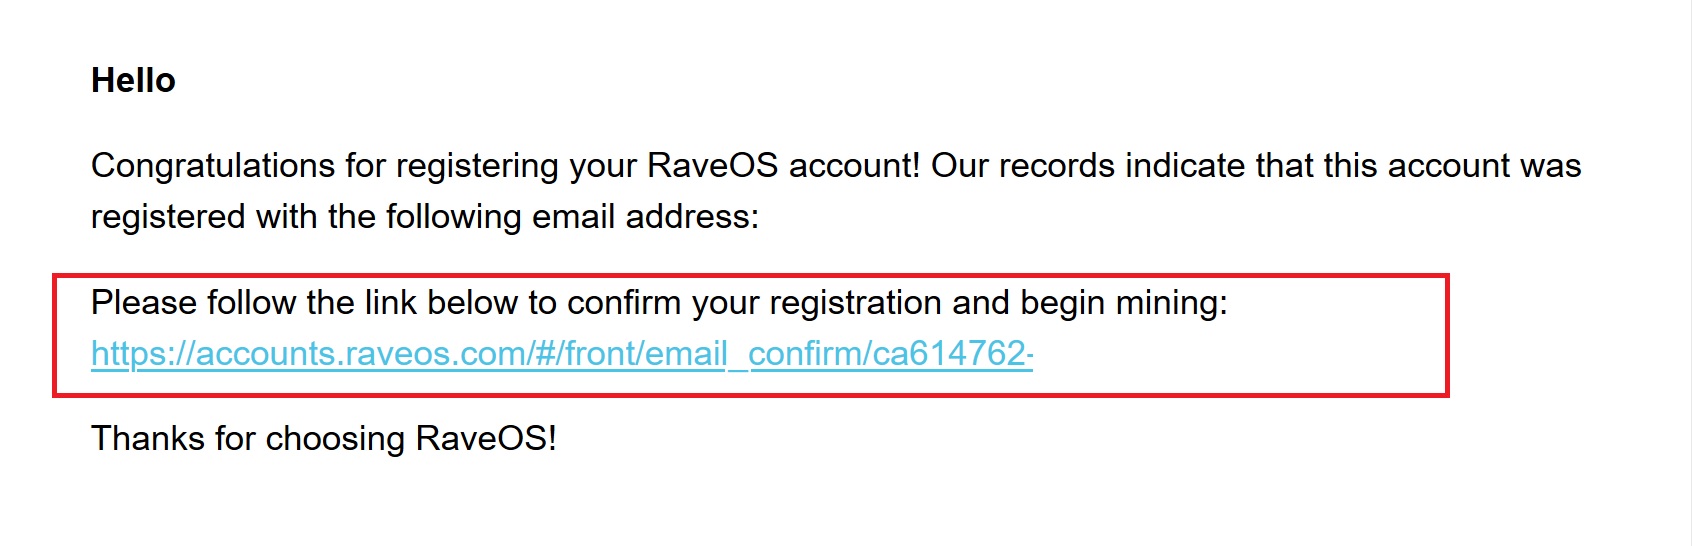 raveos email registration